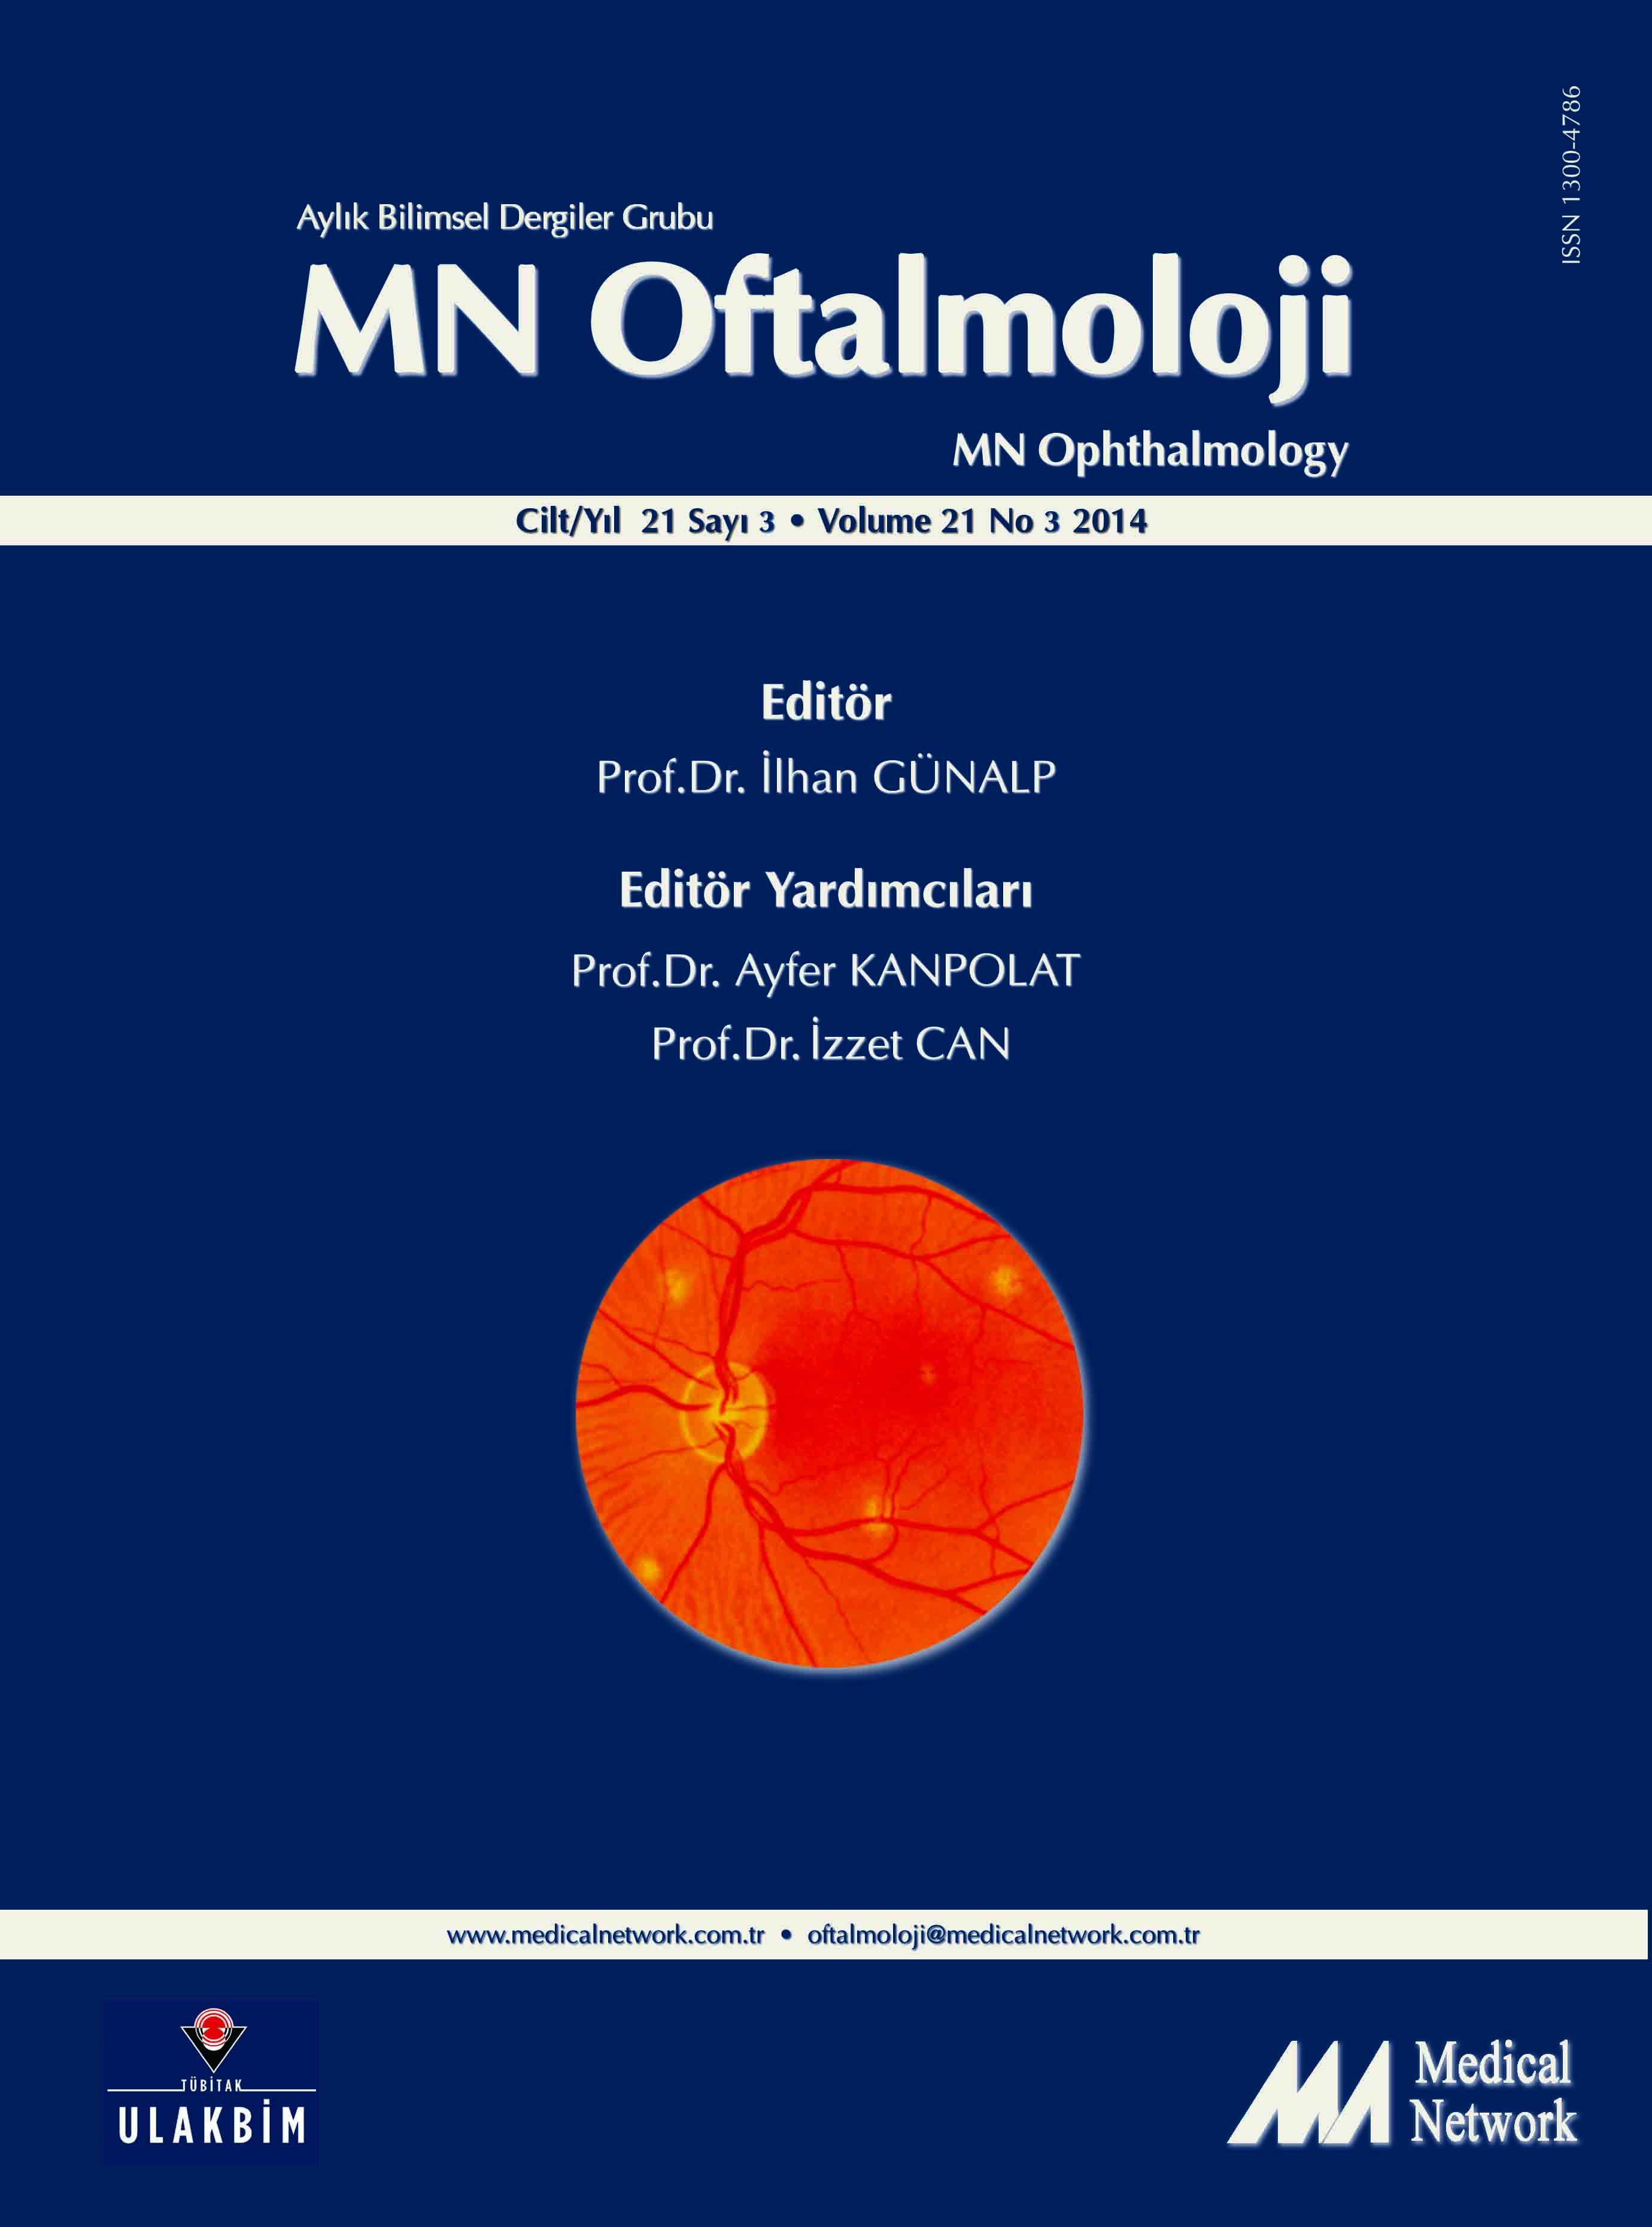 <p>MN Oftalmoloji Cilt: 21 Say: 3 2014 (MN Ophthalmology Volume: 21 No 3 2014)</p>